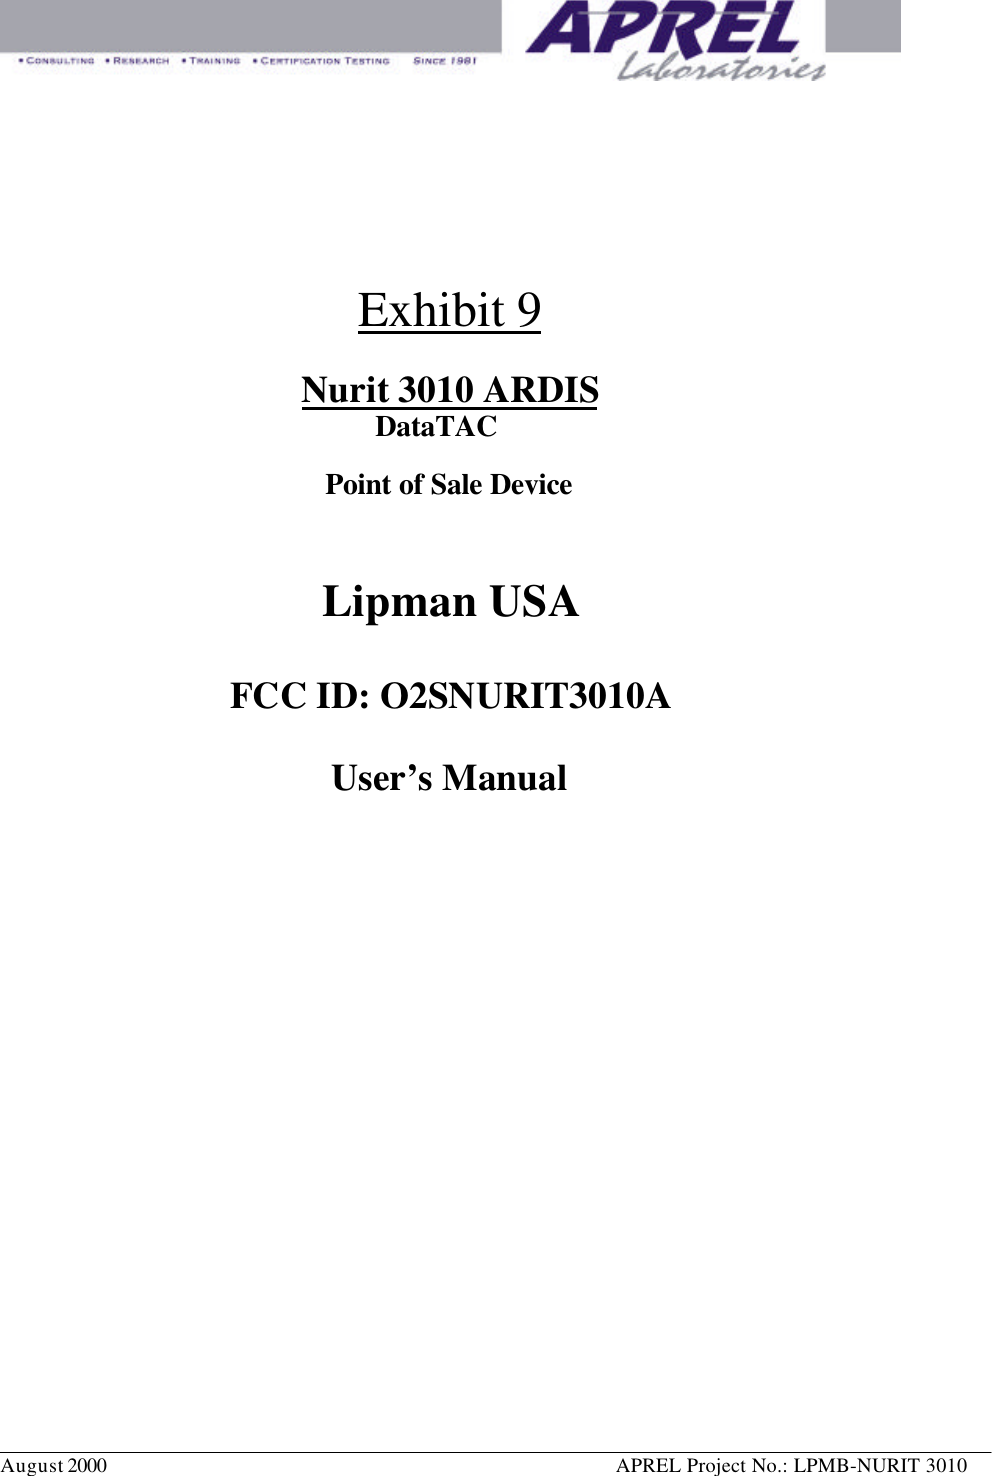 August 2000  APREL Project No.: LPMB-NURIT 3010Exhibit 9Nurit 3010 ARDISDataTACPoint of Sale DeviceLipman USAFCC ID: O2SNURIT3010AUser’s Manual